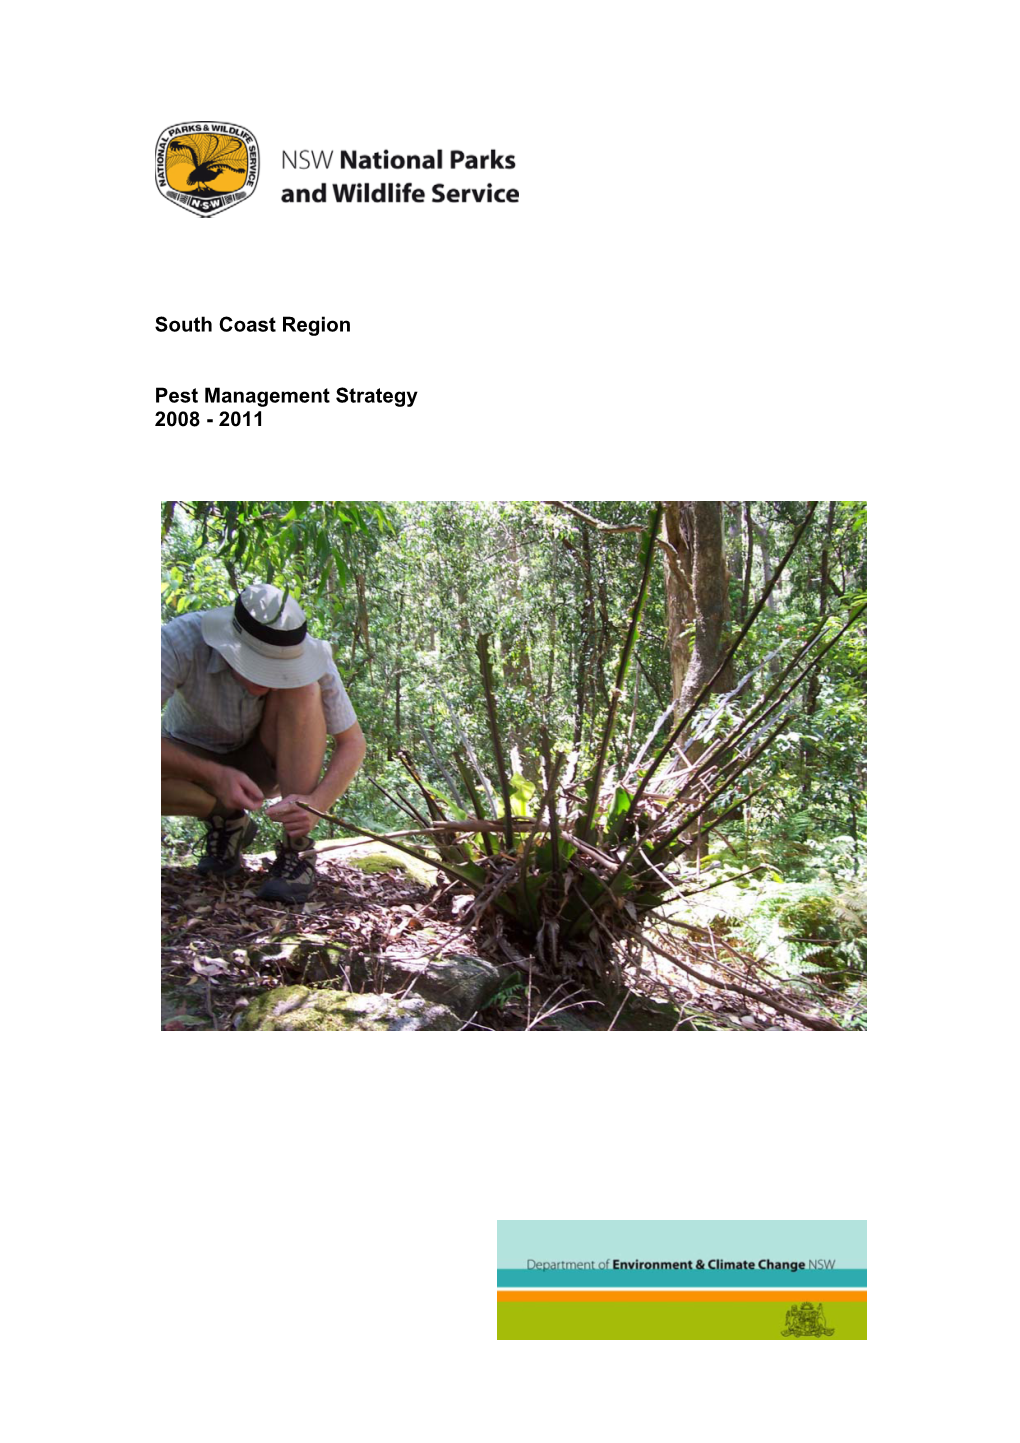 Pest Management Strategy 2008 - 2011